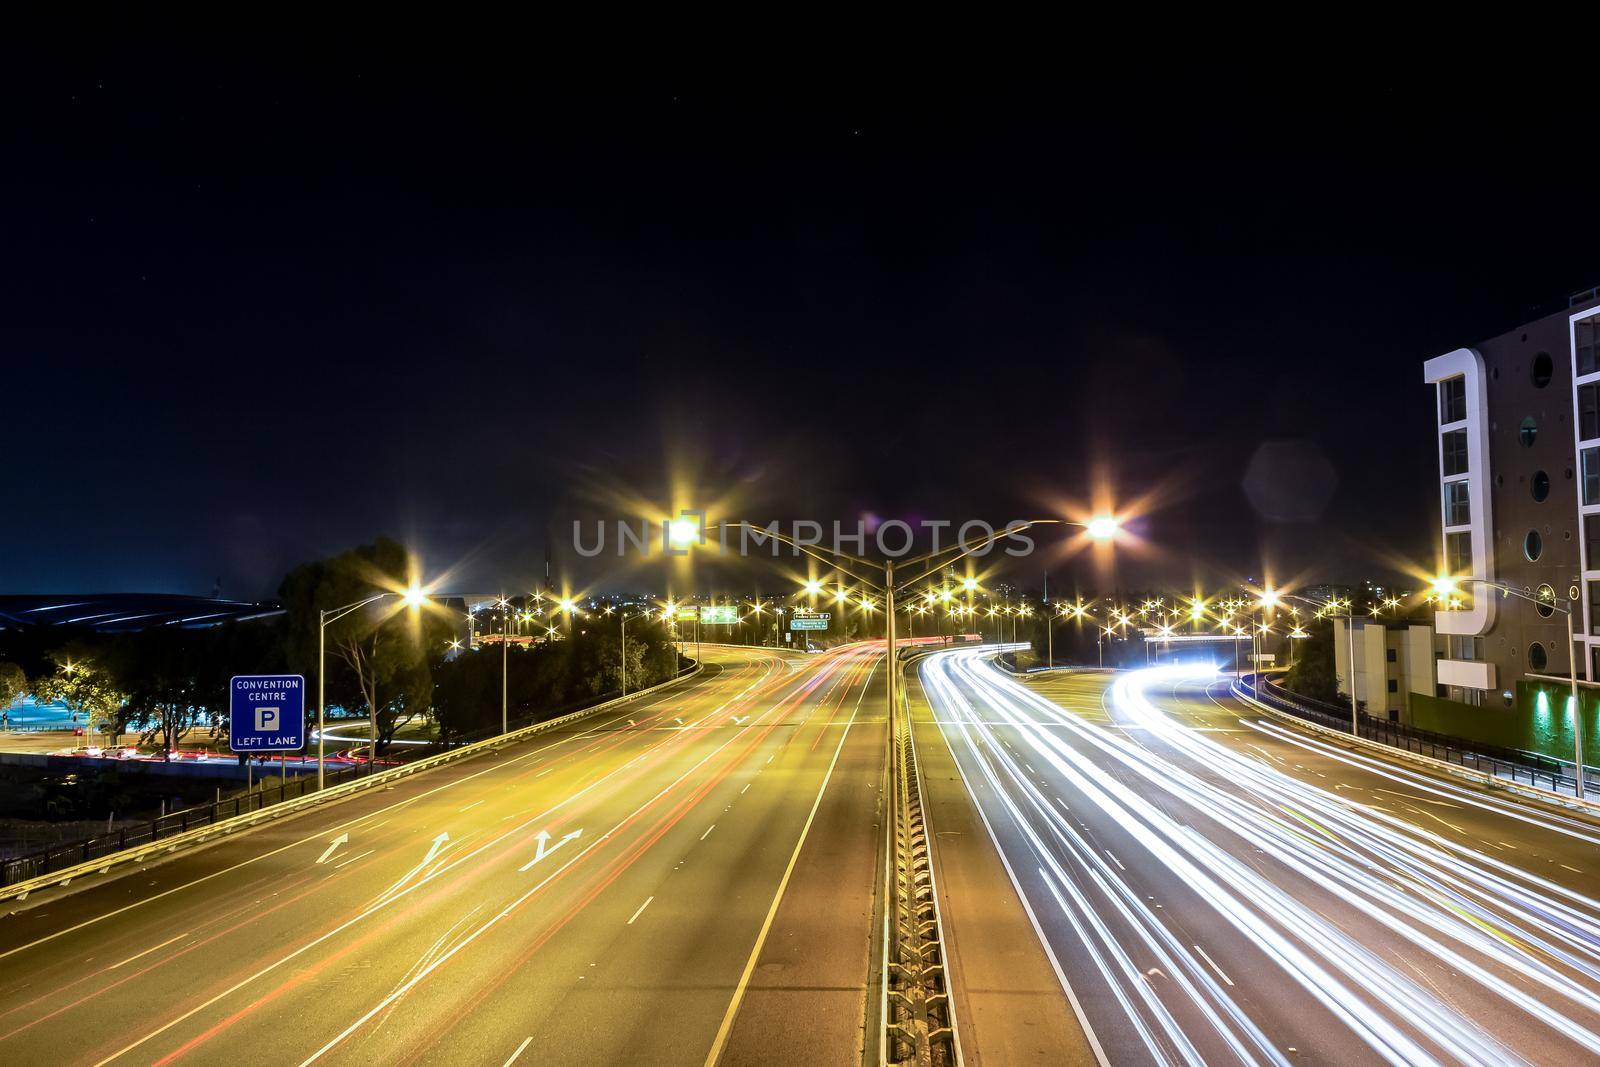 Traffic lights on city road during night in Perth, WA Australia.